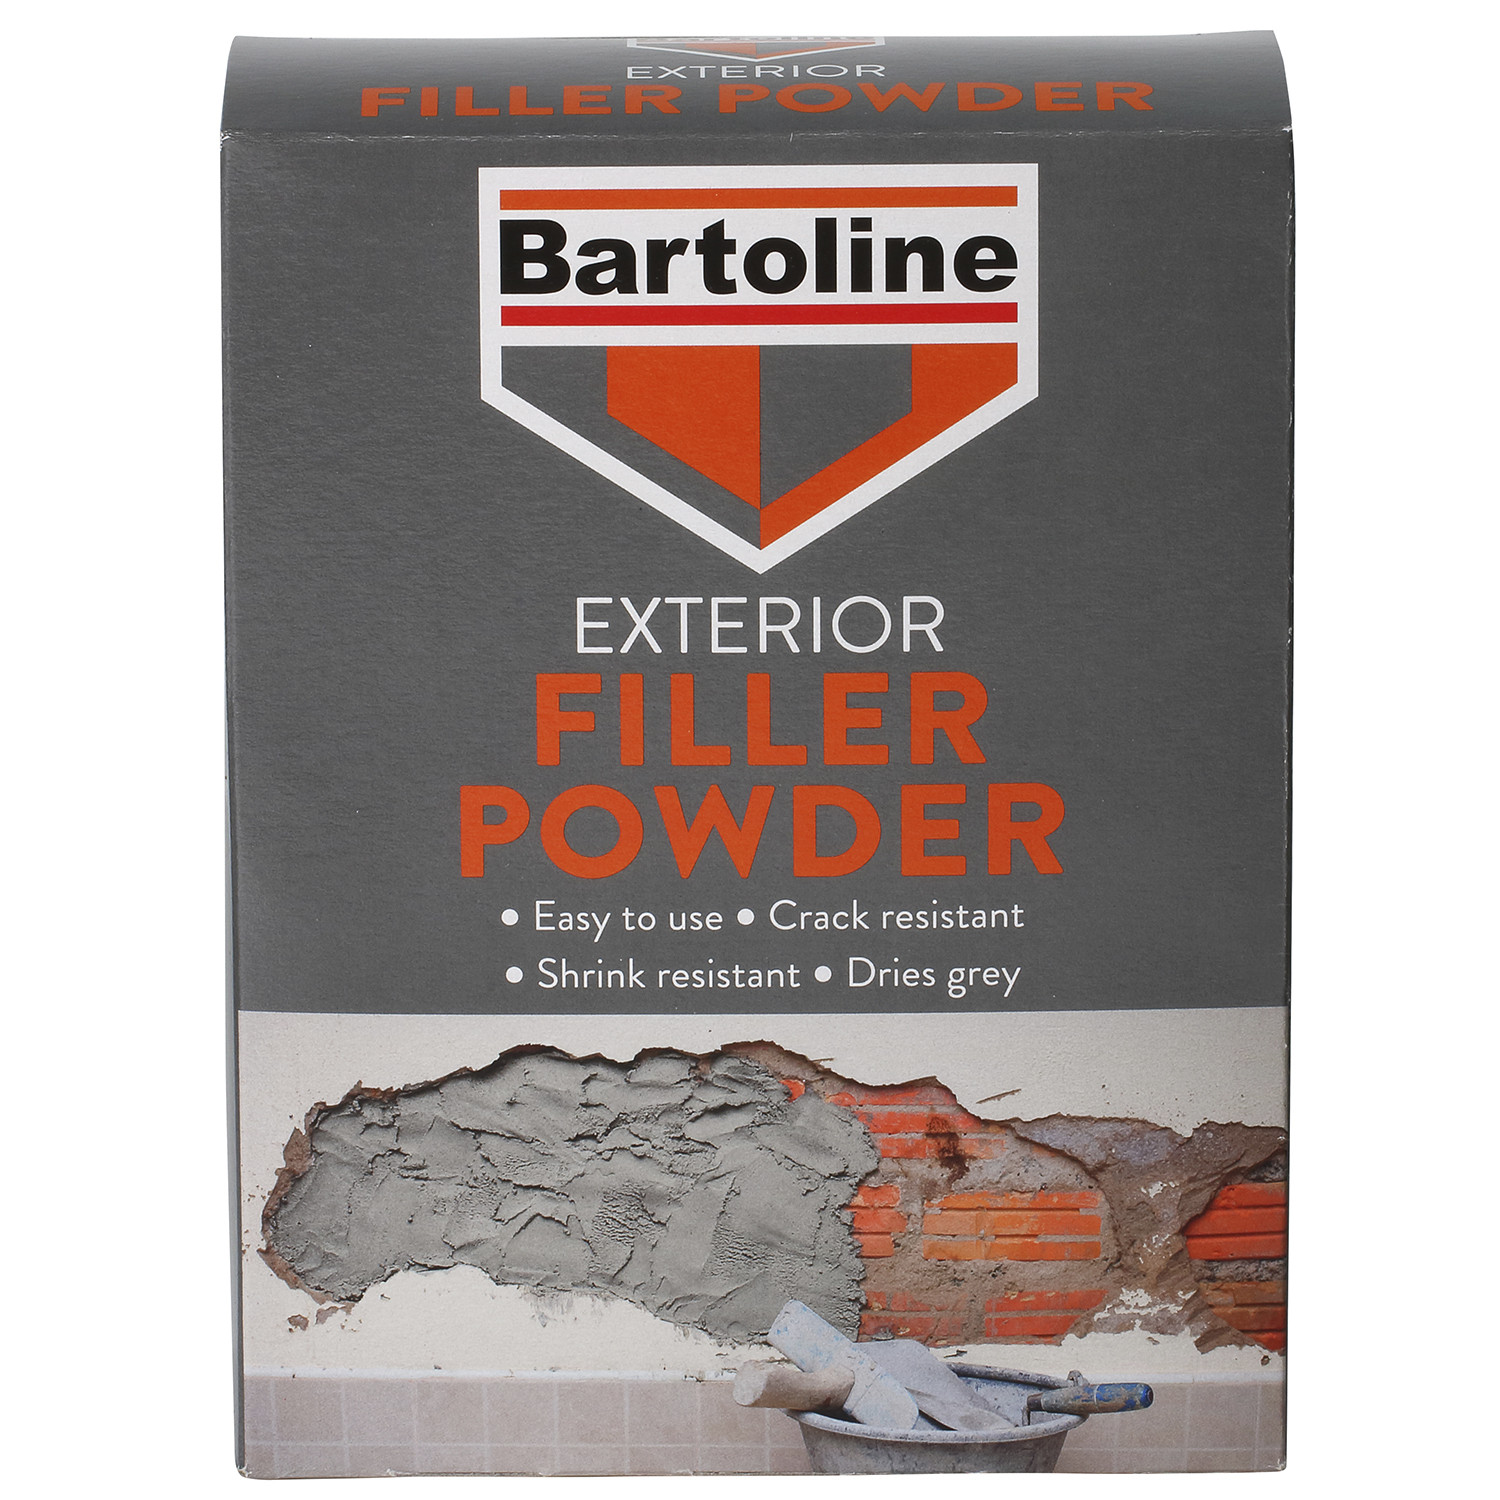 Bartoline Exterior Filling Powder Image